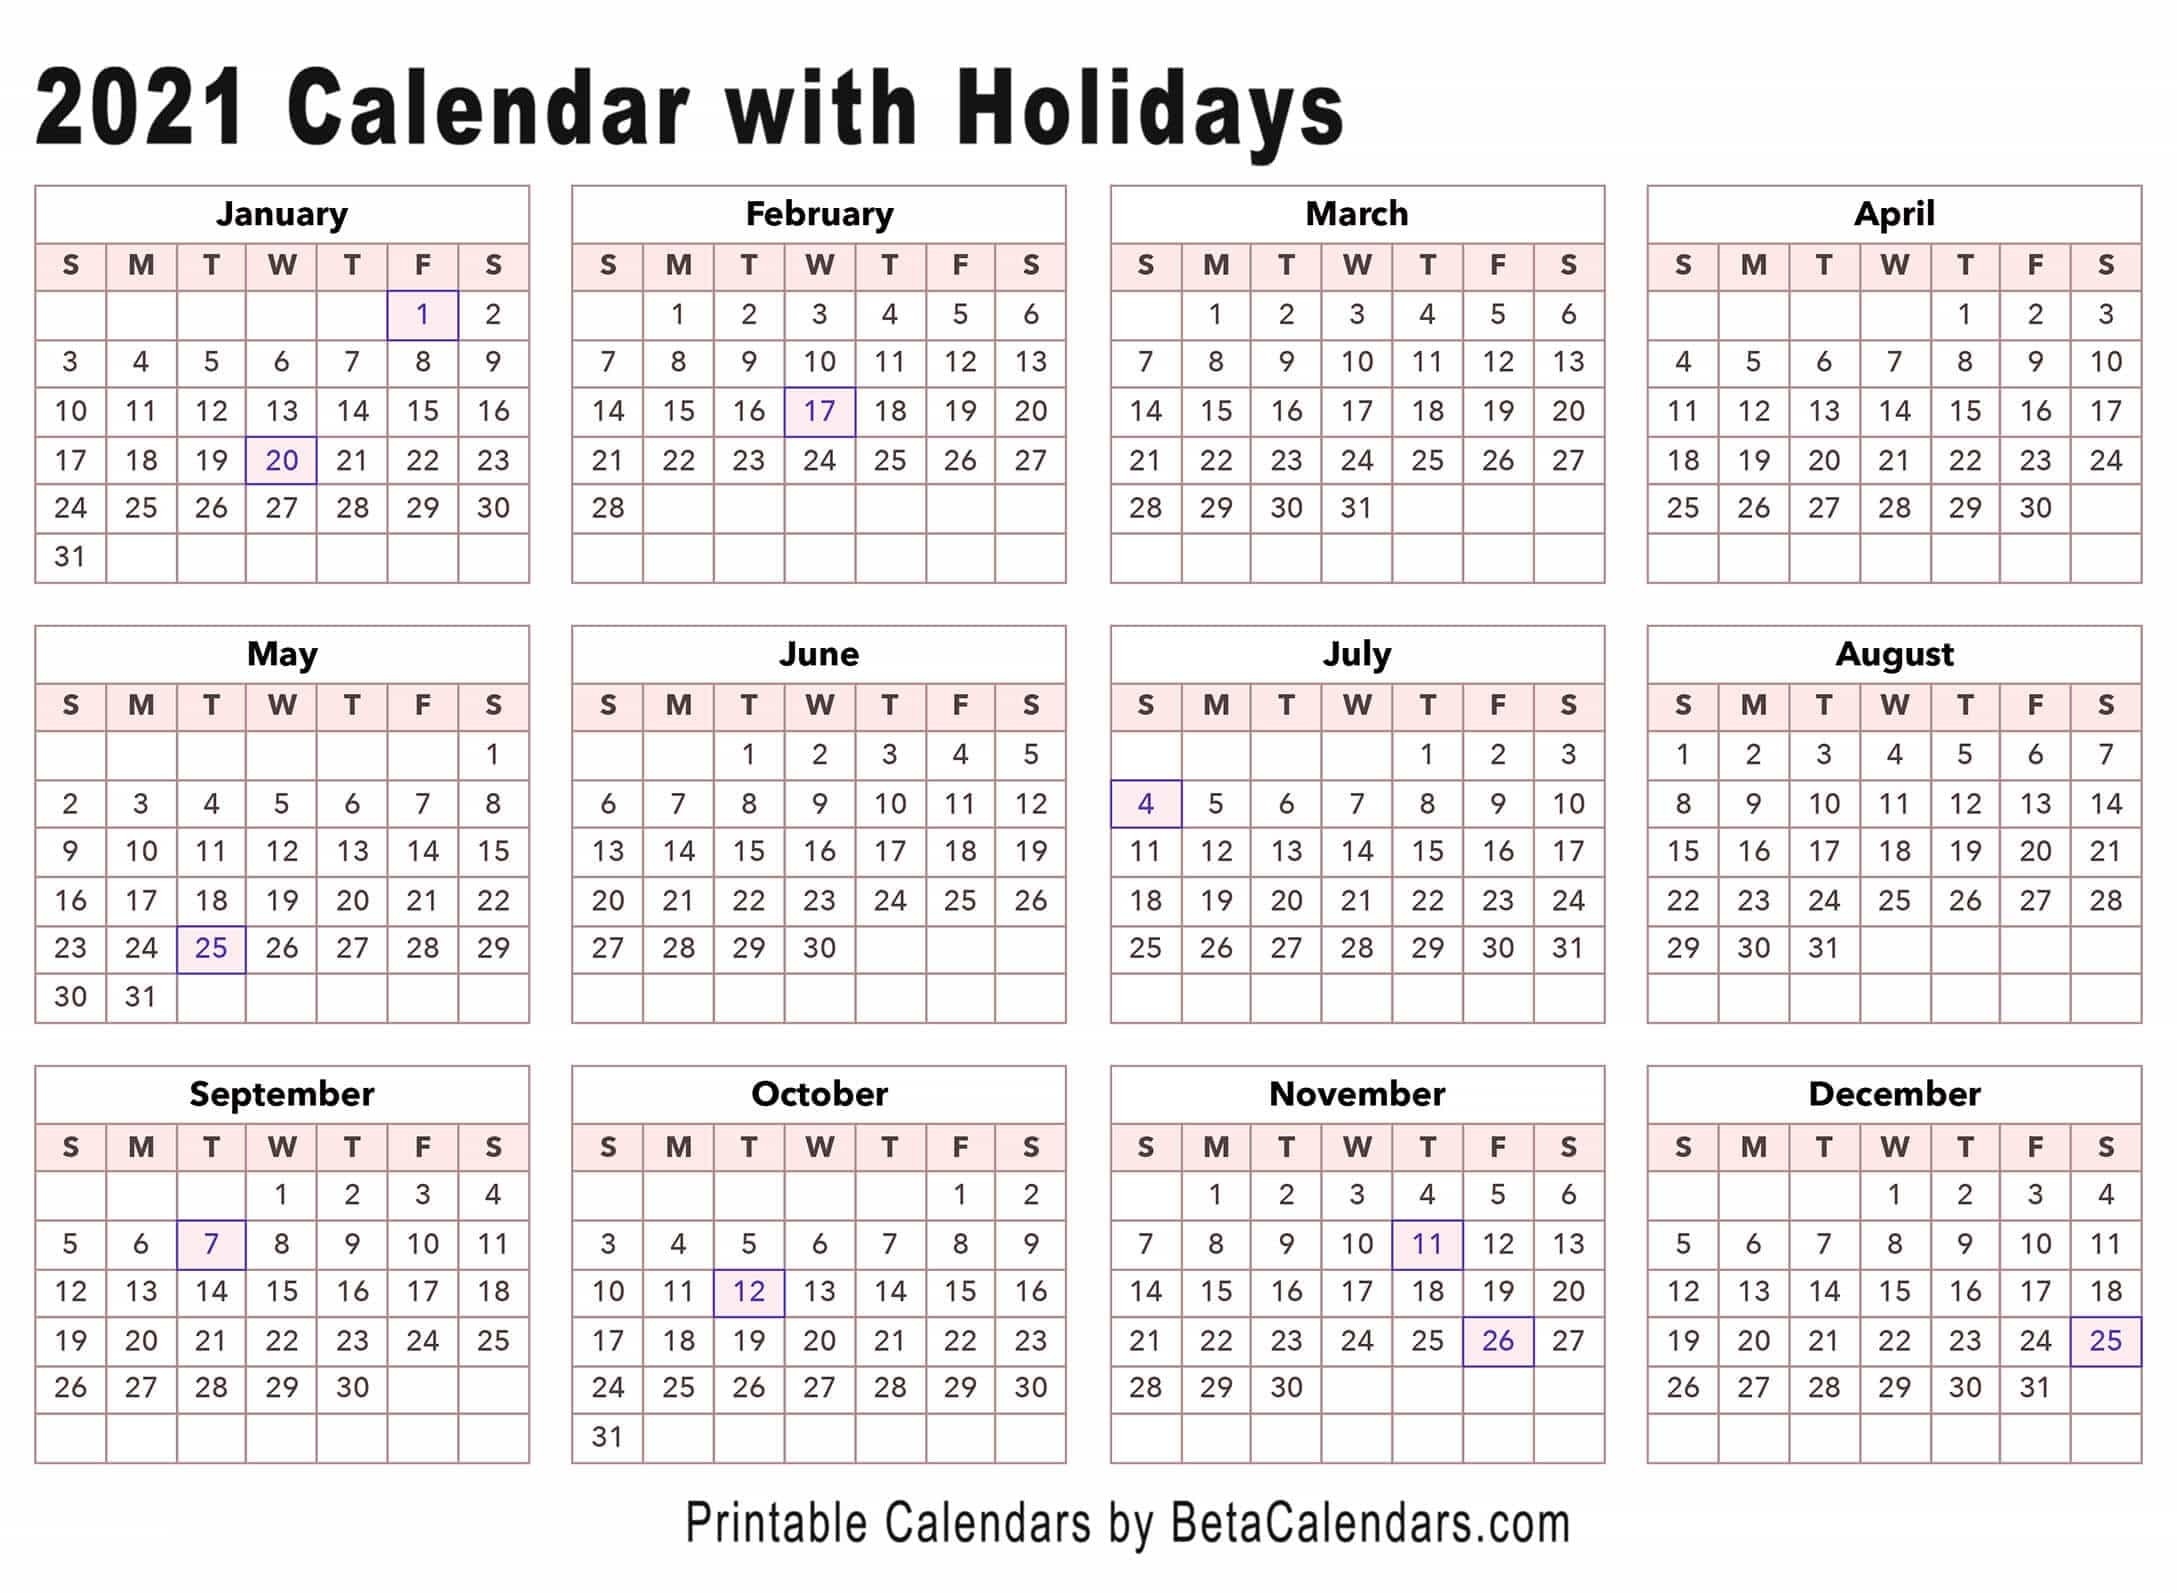 2021 Calendar - Beta Calendars-2021 Calendar Dates Print Off